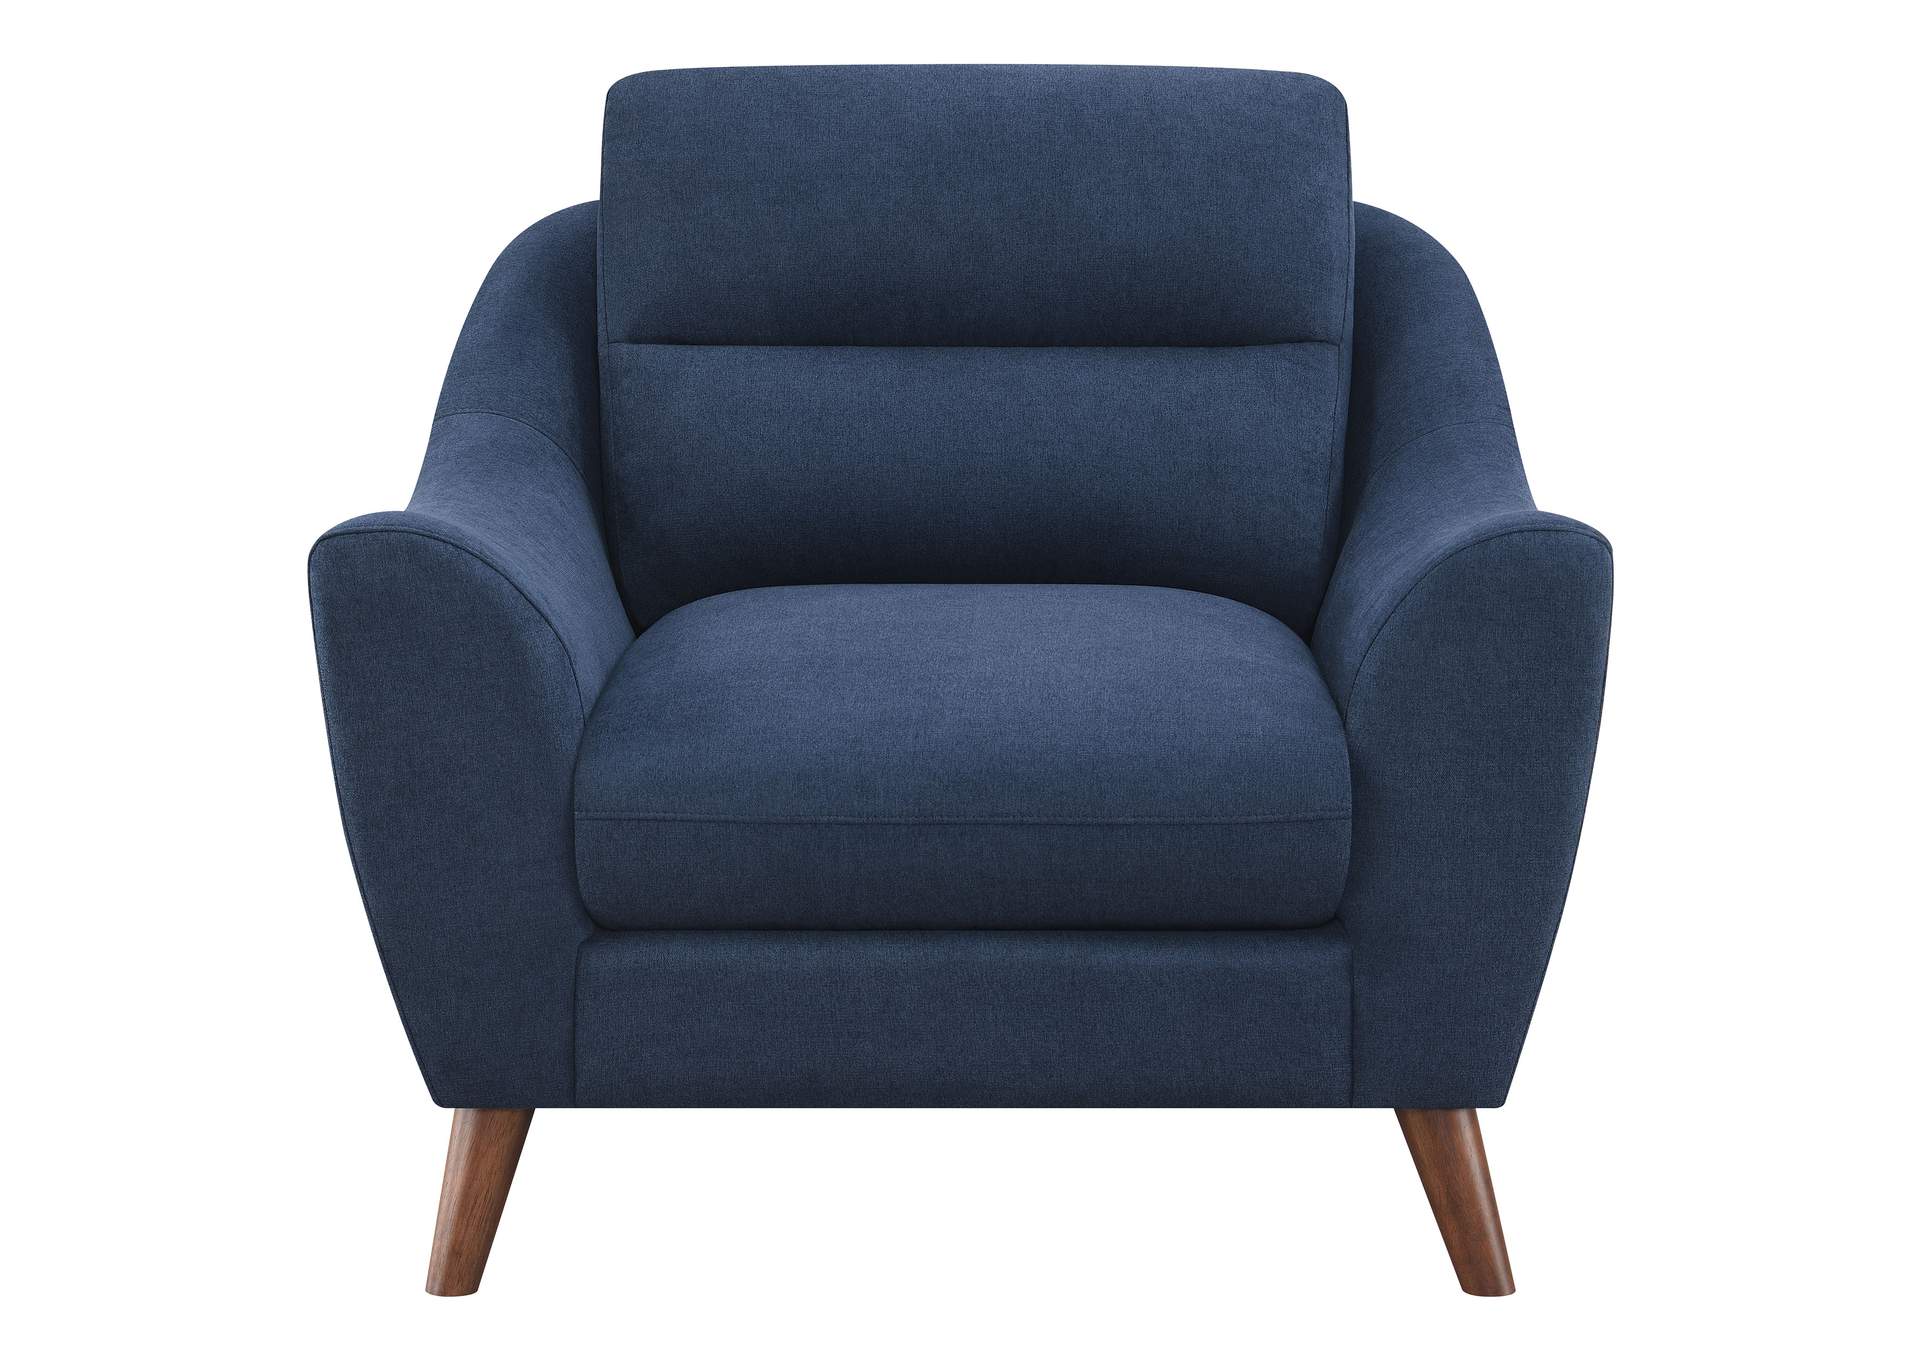 Gano Sloped Arm Upholstered Chair Navy Blue,Coaster Furniture